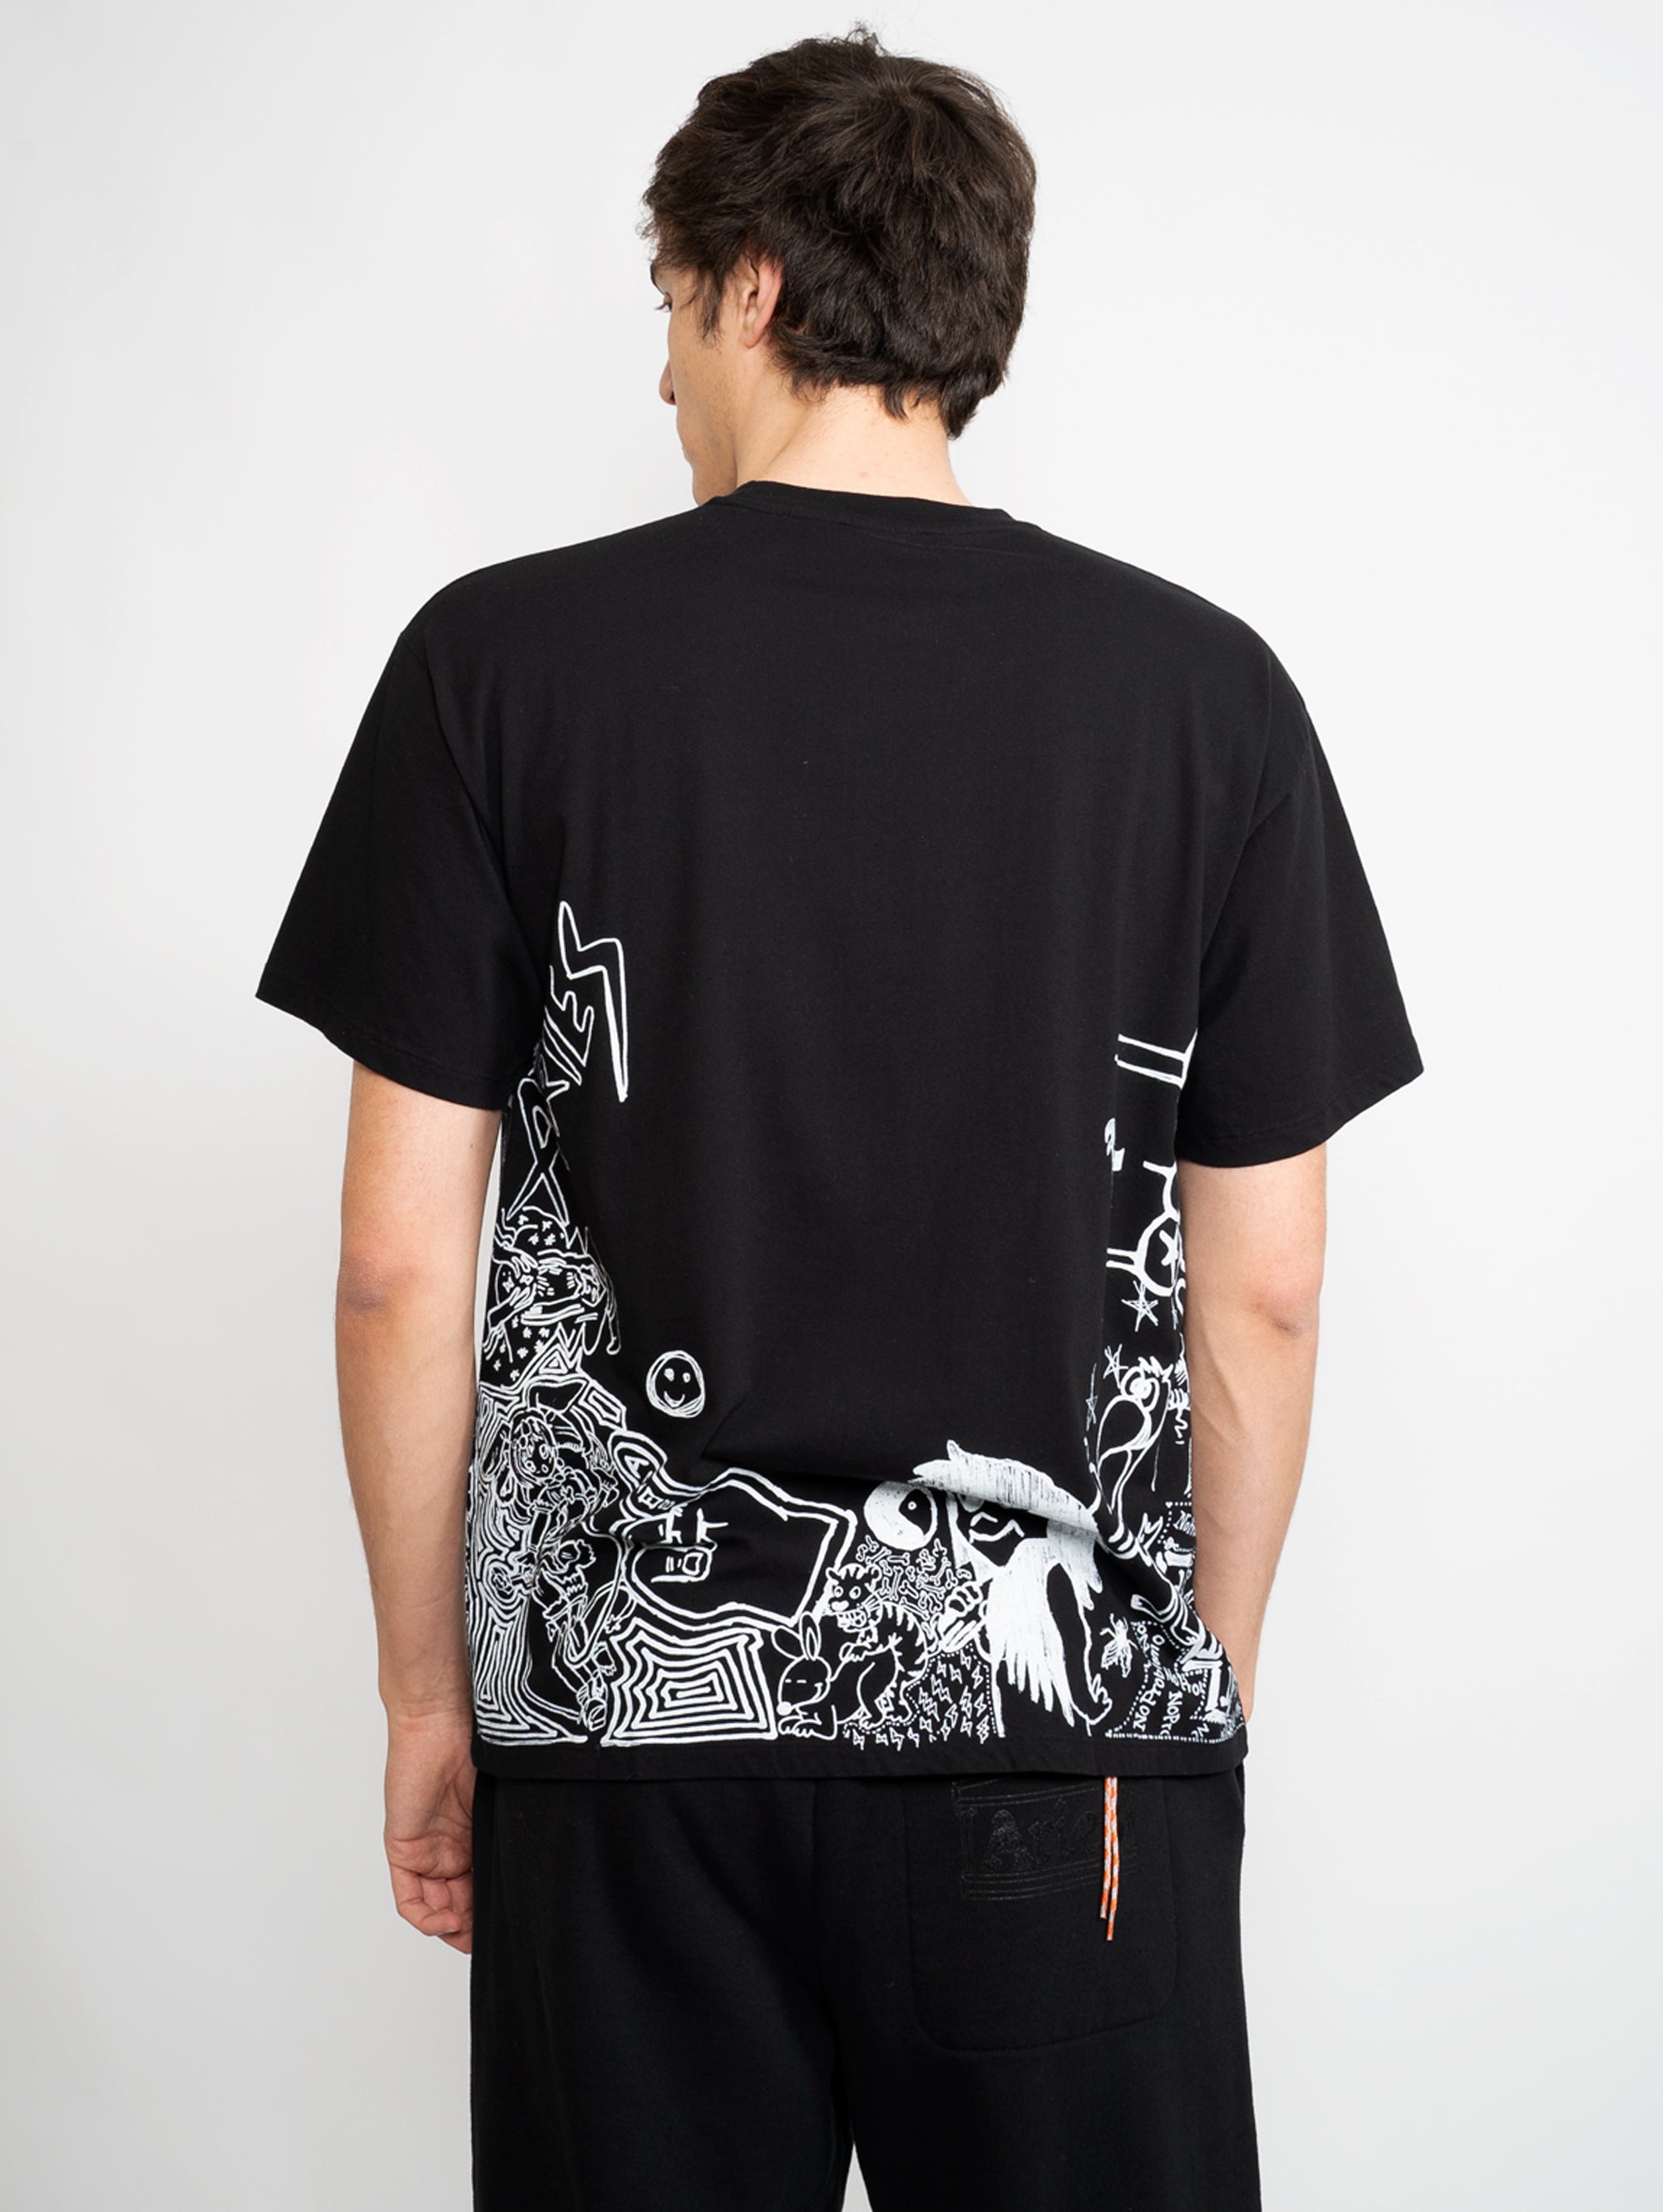 Schwarzes T-Shirt mit Scribble-Print